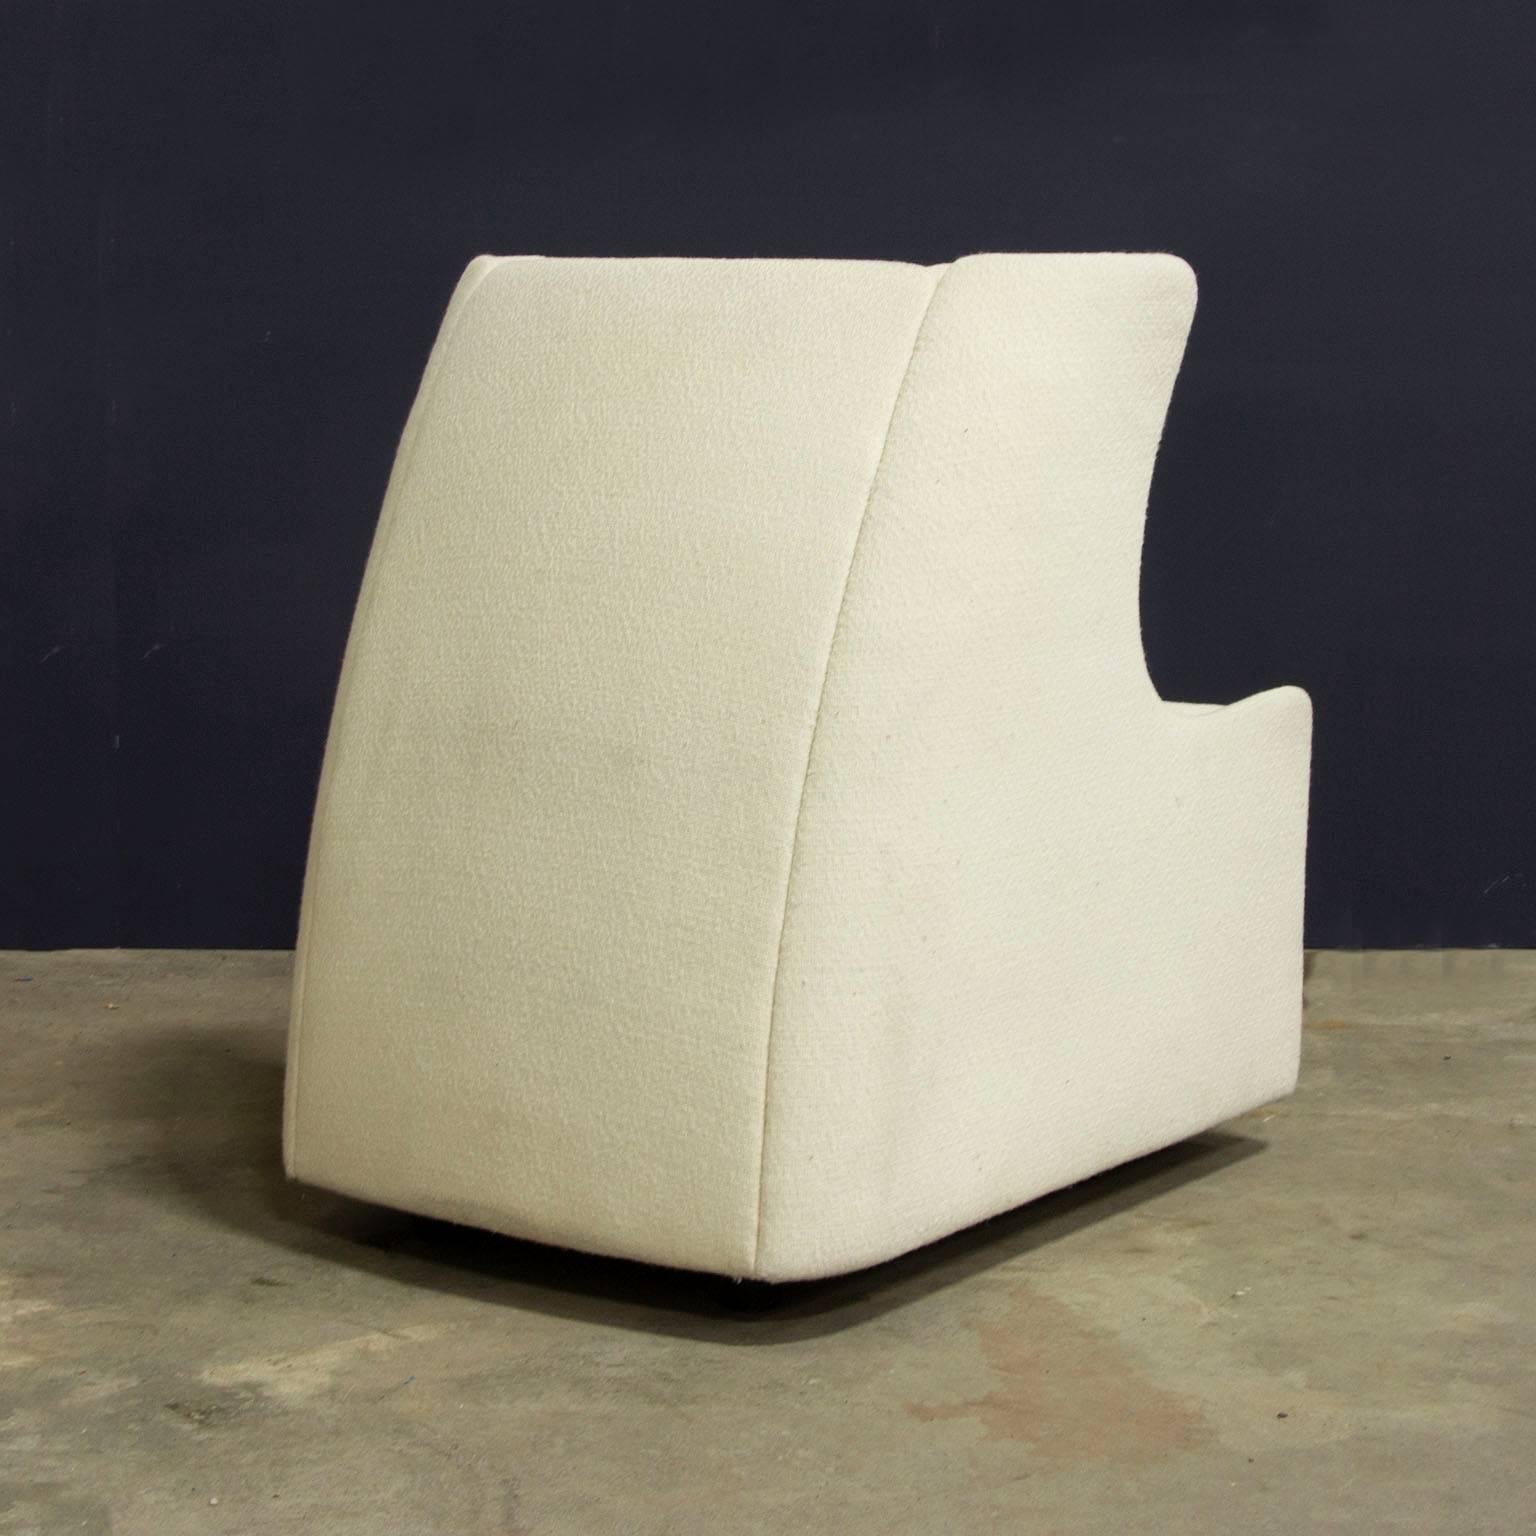 Organic Modern Vico Magistretti & Per Skovholt, Elegant Comfi Senior Chair 'Mobi Chair, 2000 For Sale